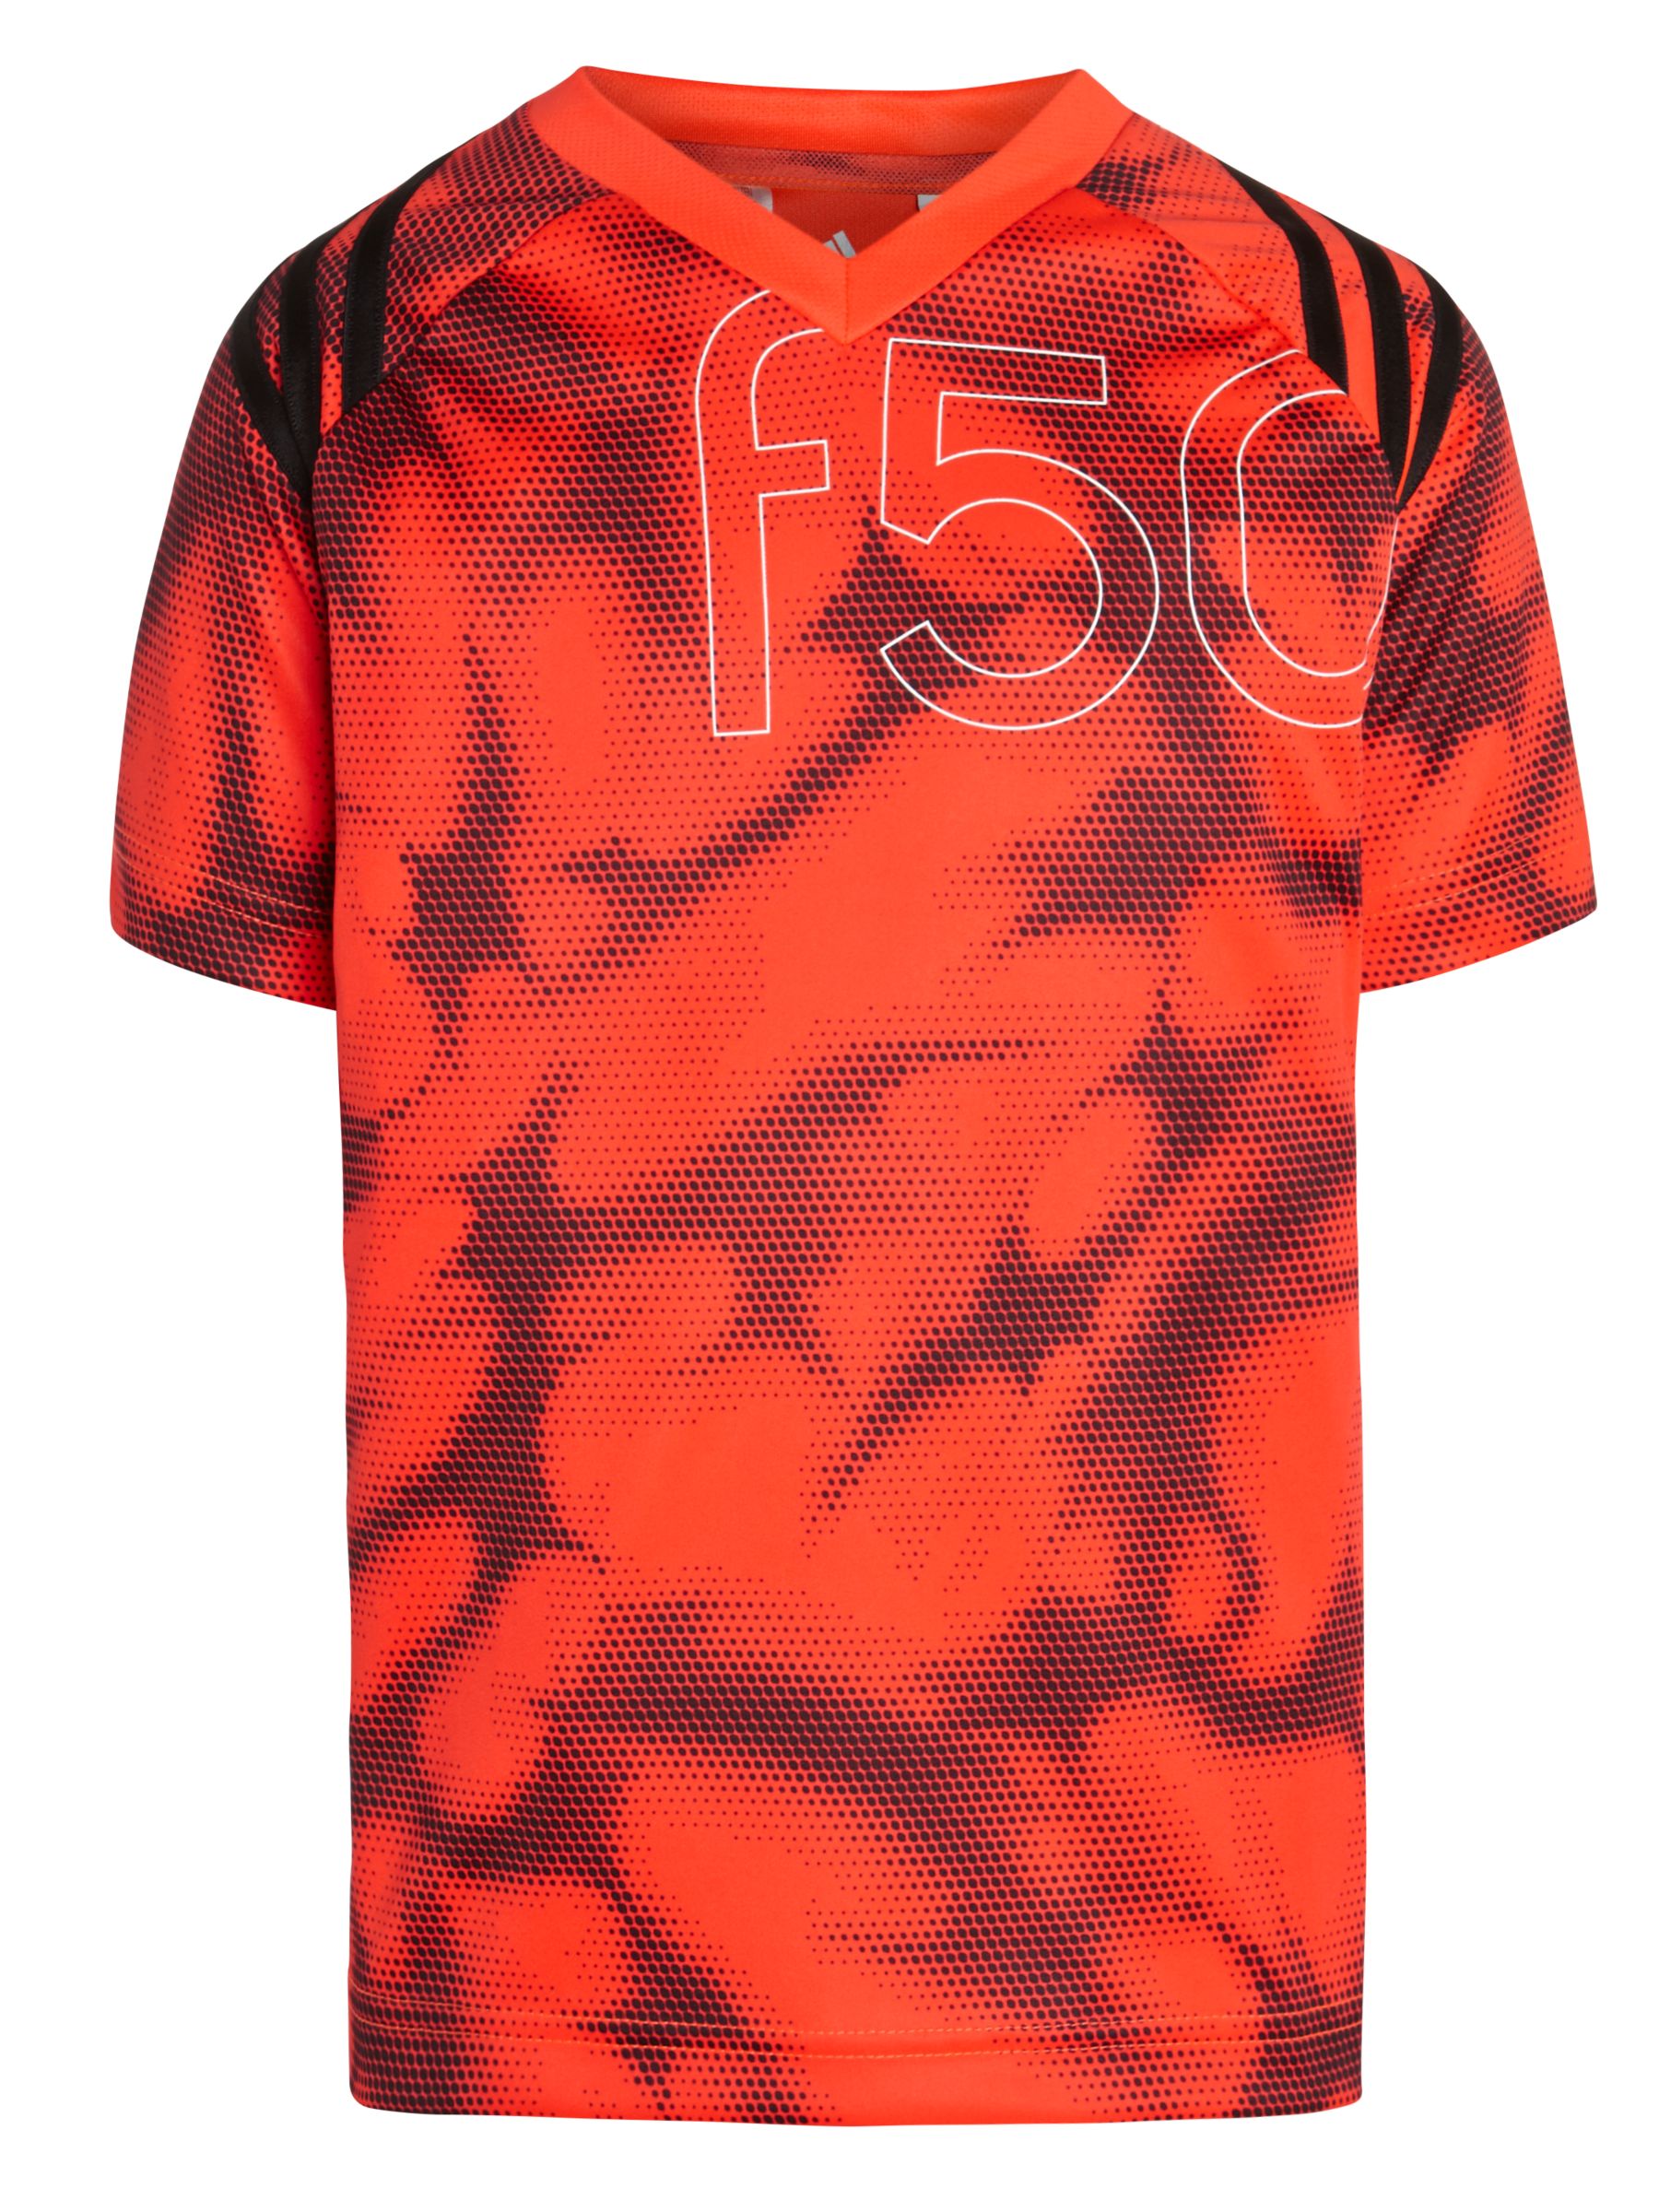 f50 adidas shirt